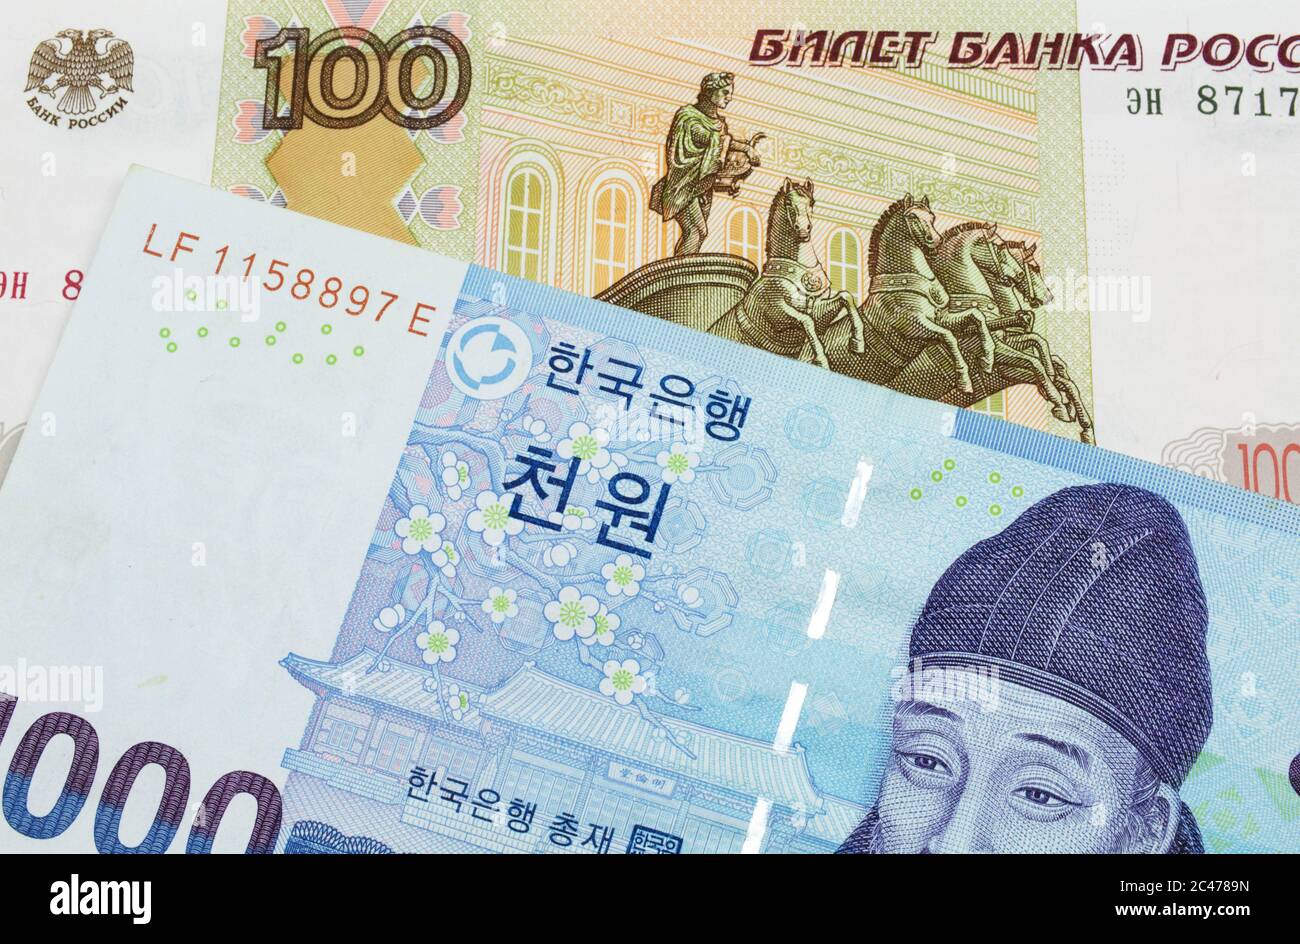 100 ribu won to myr